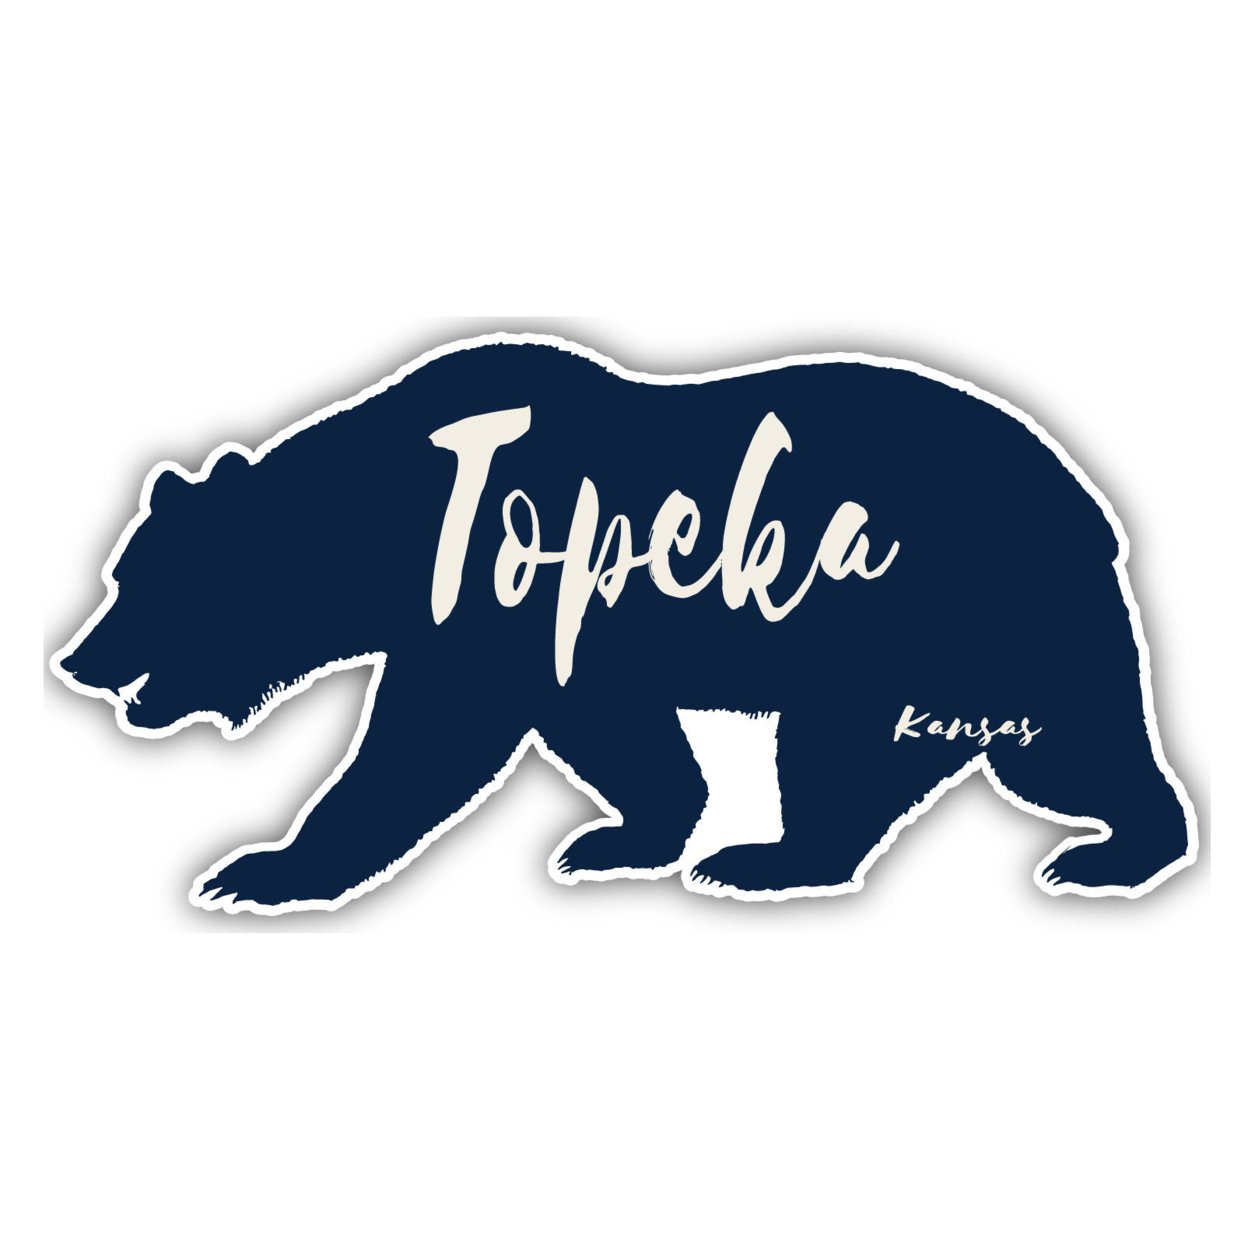 Topeka Kansas Souvenir Decorative Stickers (Choose Theme And Size) - Single Unit, 4-Inch, Bear